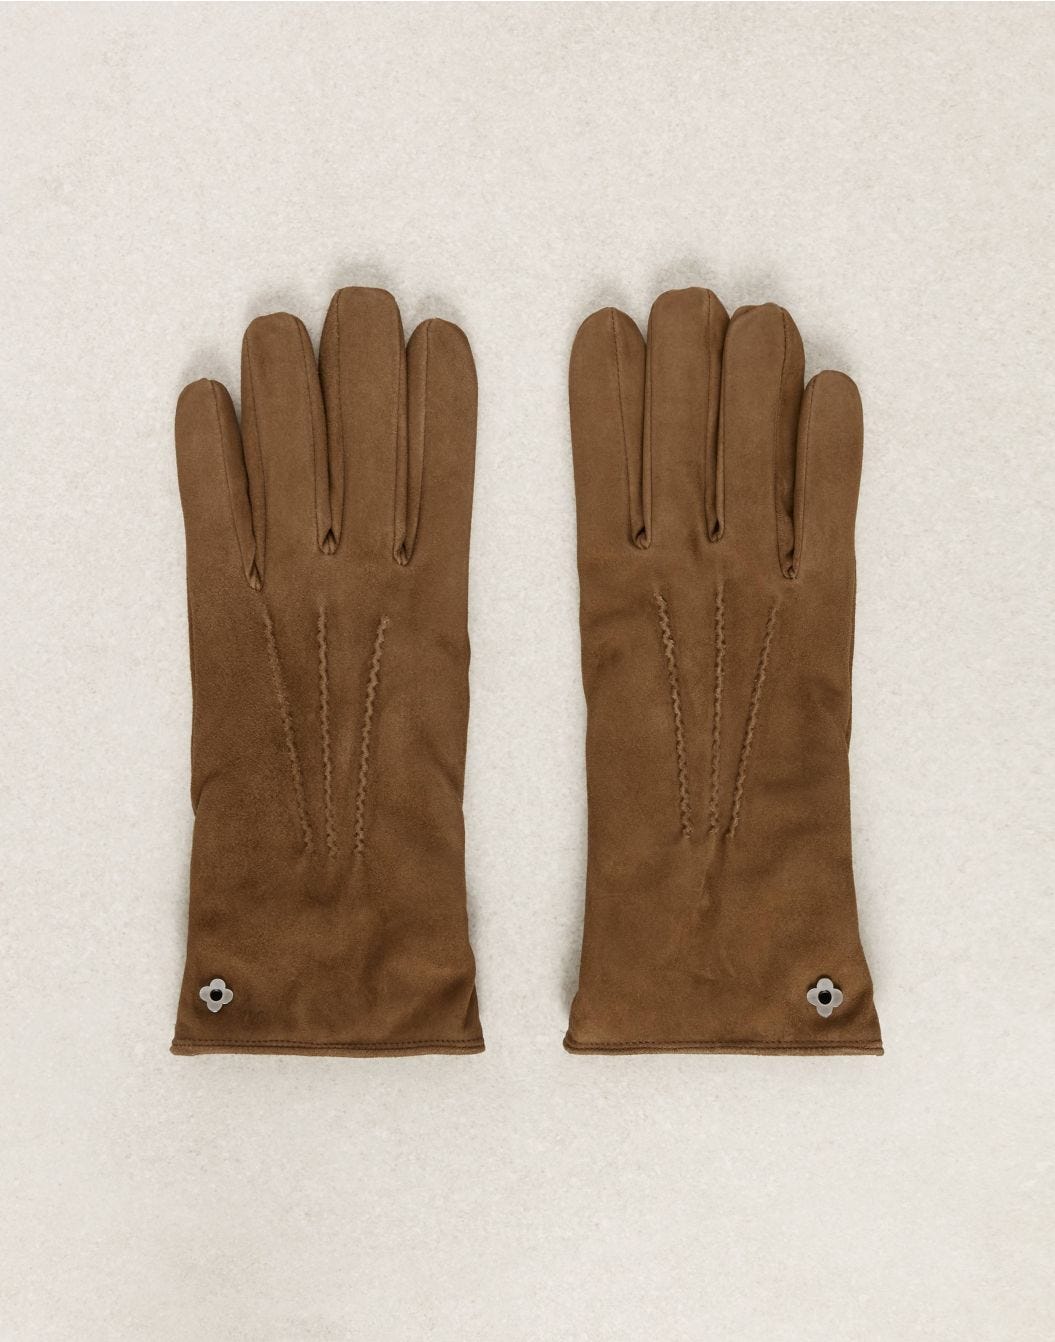 Gloves in hazelnut-brown suede and cashmere